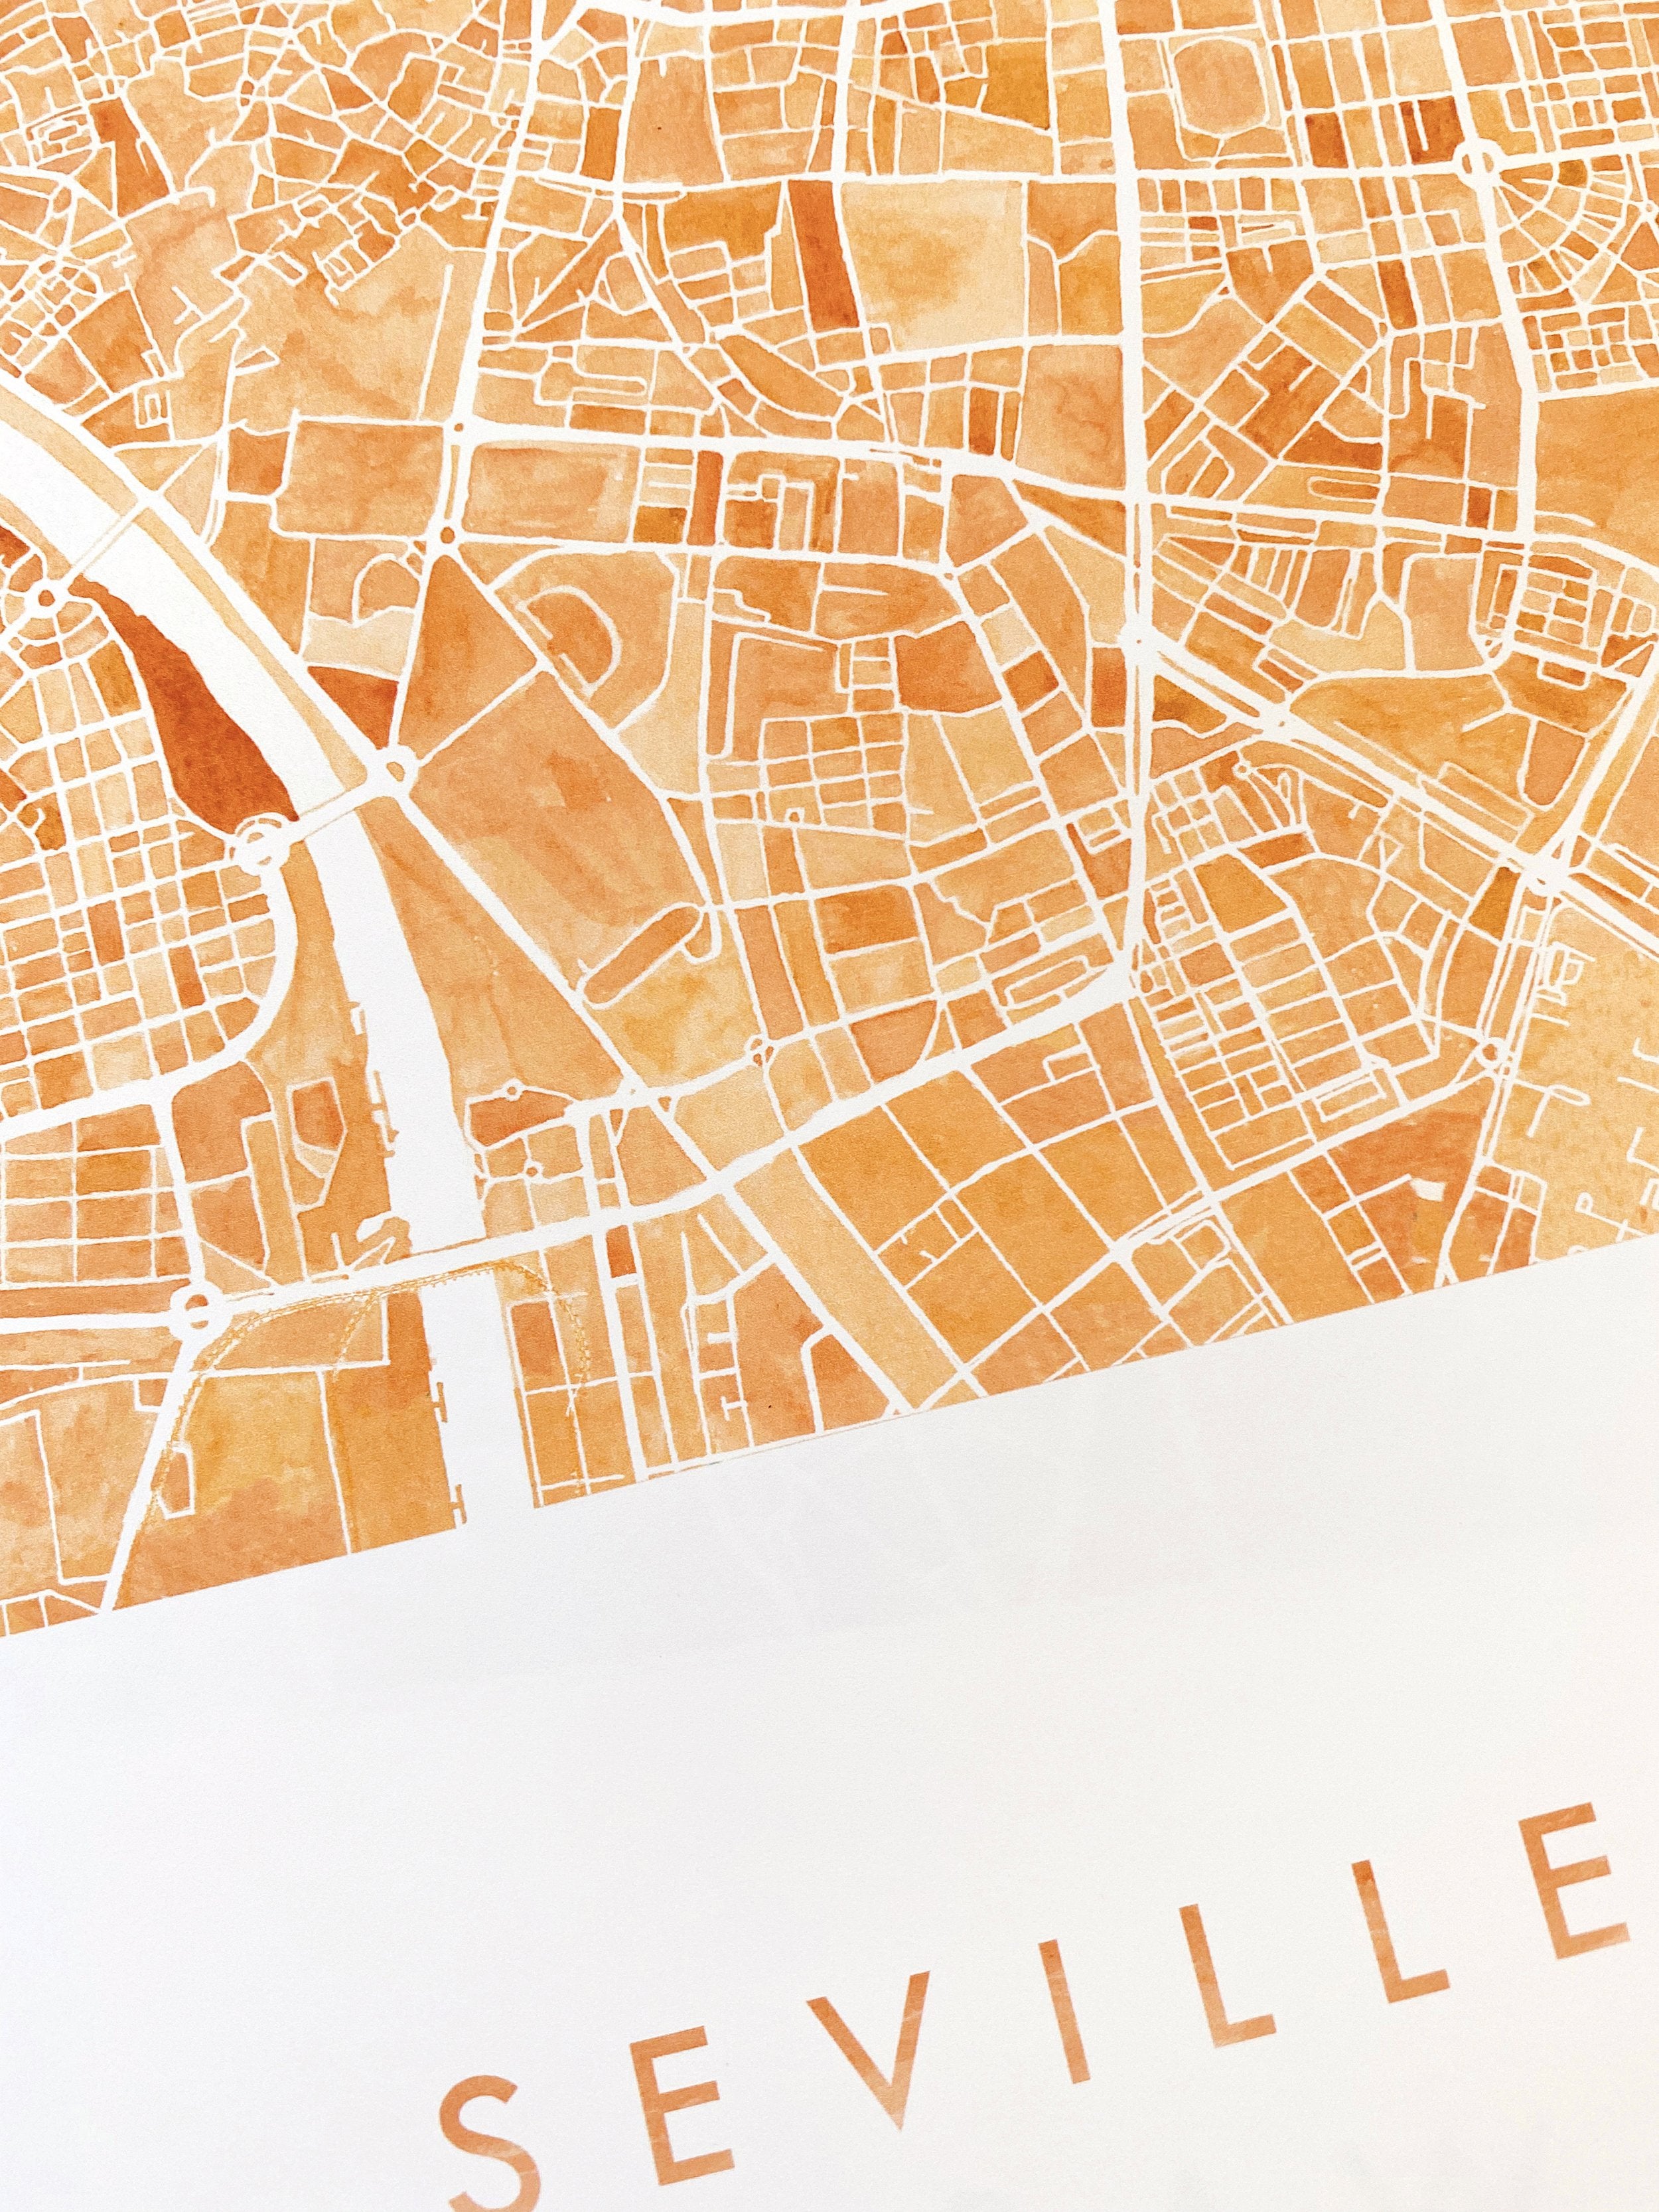 SEVILLE Watercolor City Blocks Map: PRINT